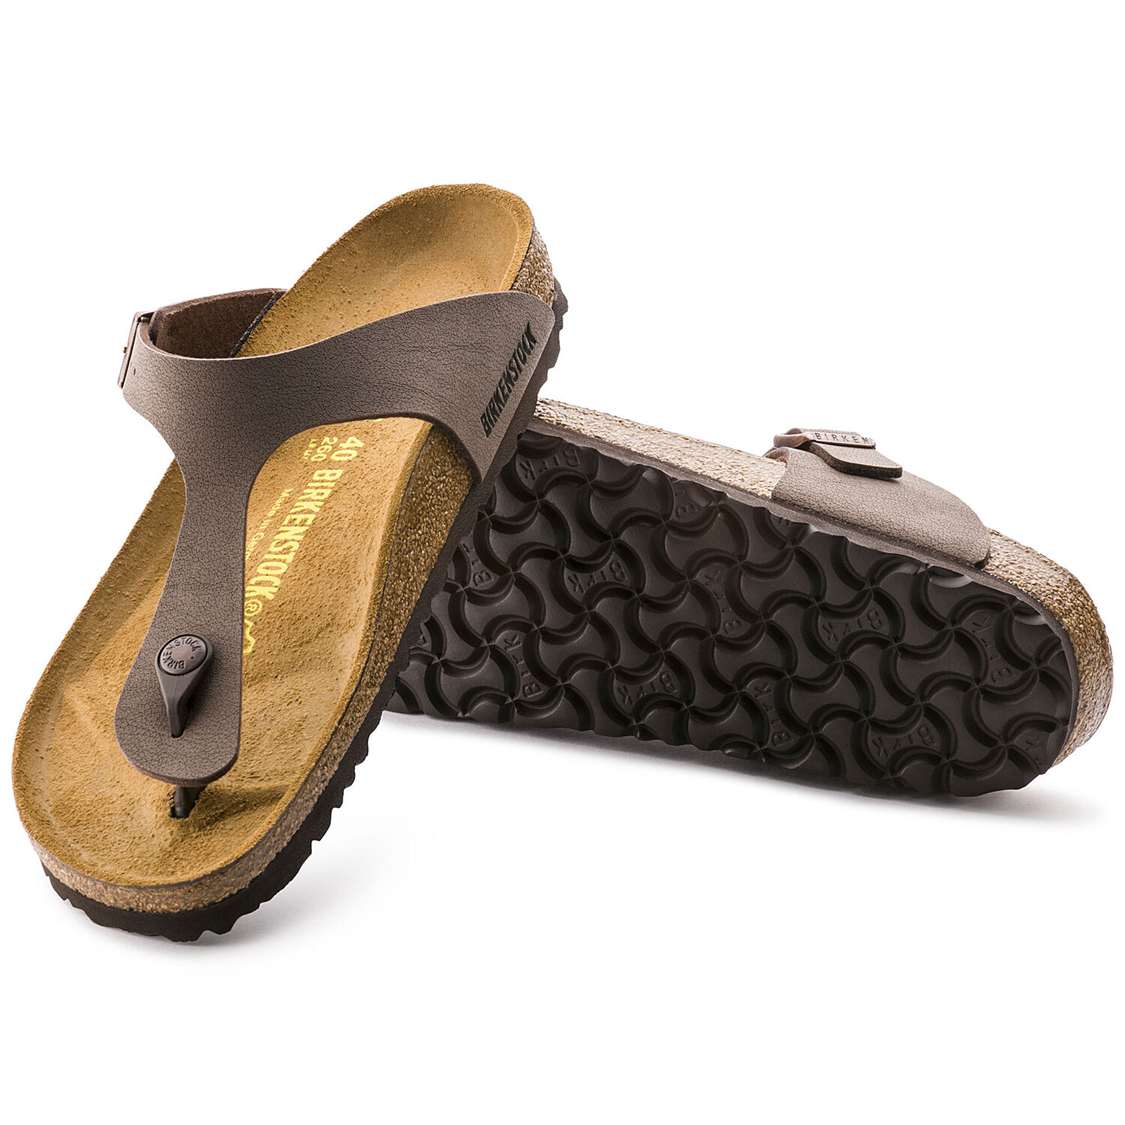 Yellow Birkenstock Gizeh Birkibuc Men's One Strap Sandals | eZ552kL9Gna